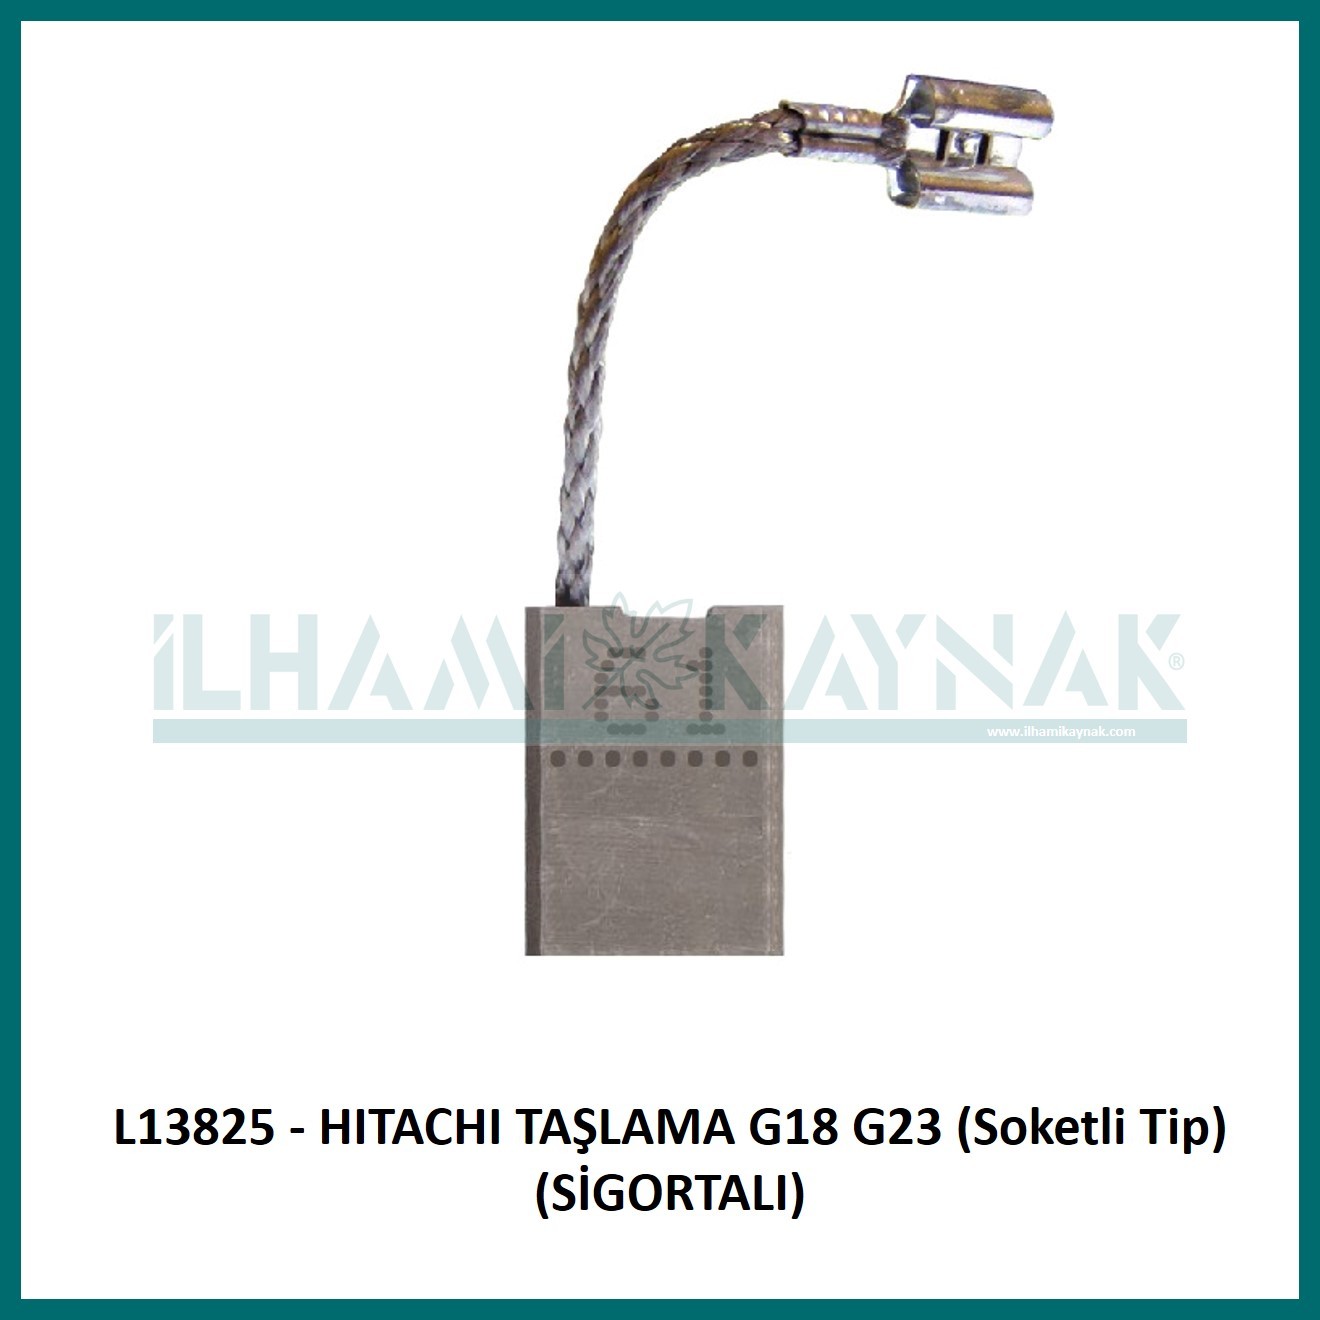 L13825 - HITACHI TAŞLAMA G18 G23 (Soketli Tip) (SİGORTALI) - 7*17*23 mm - Minimum Satın Alım: 10 Adet